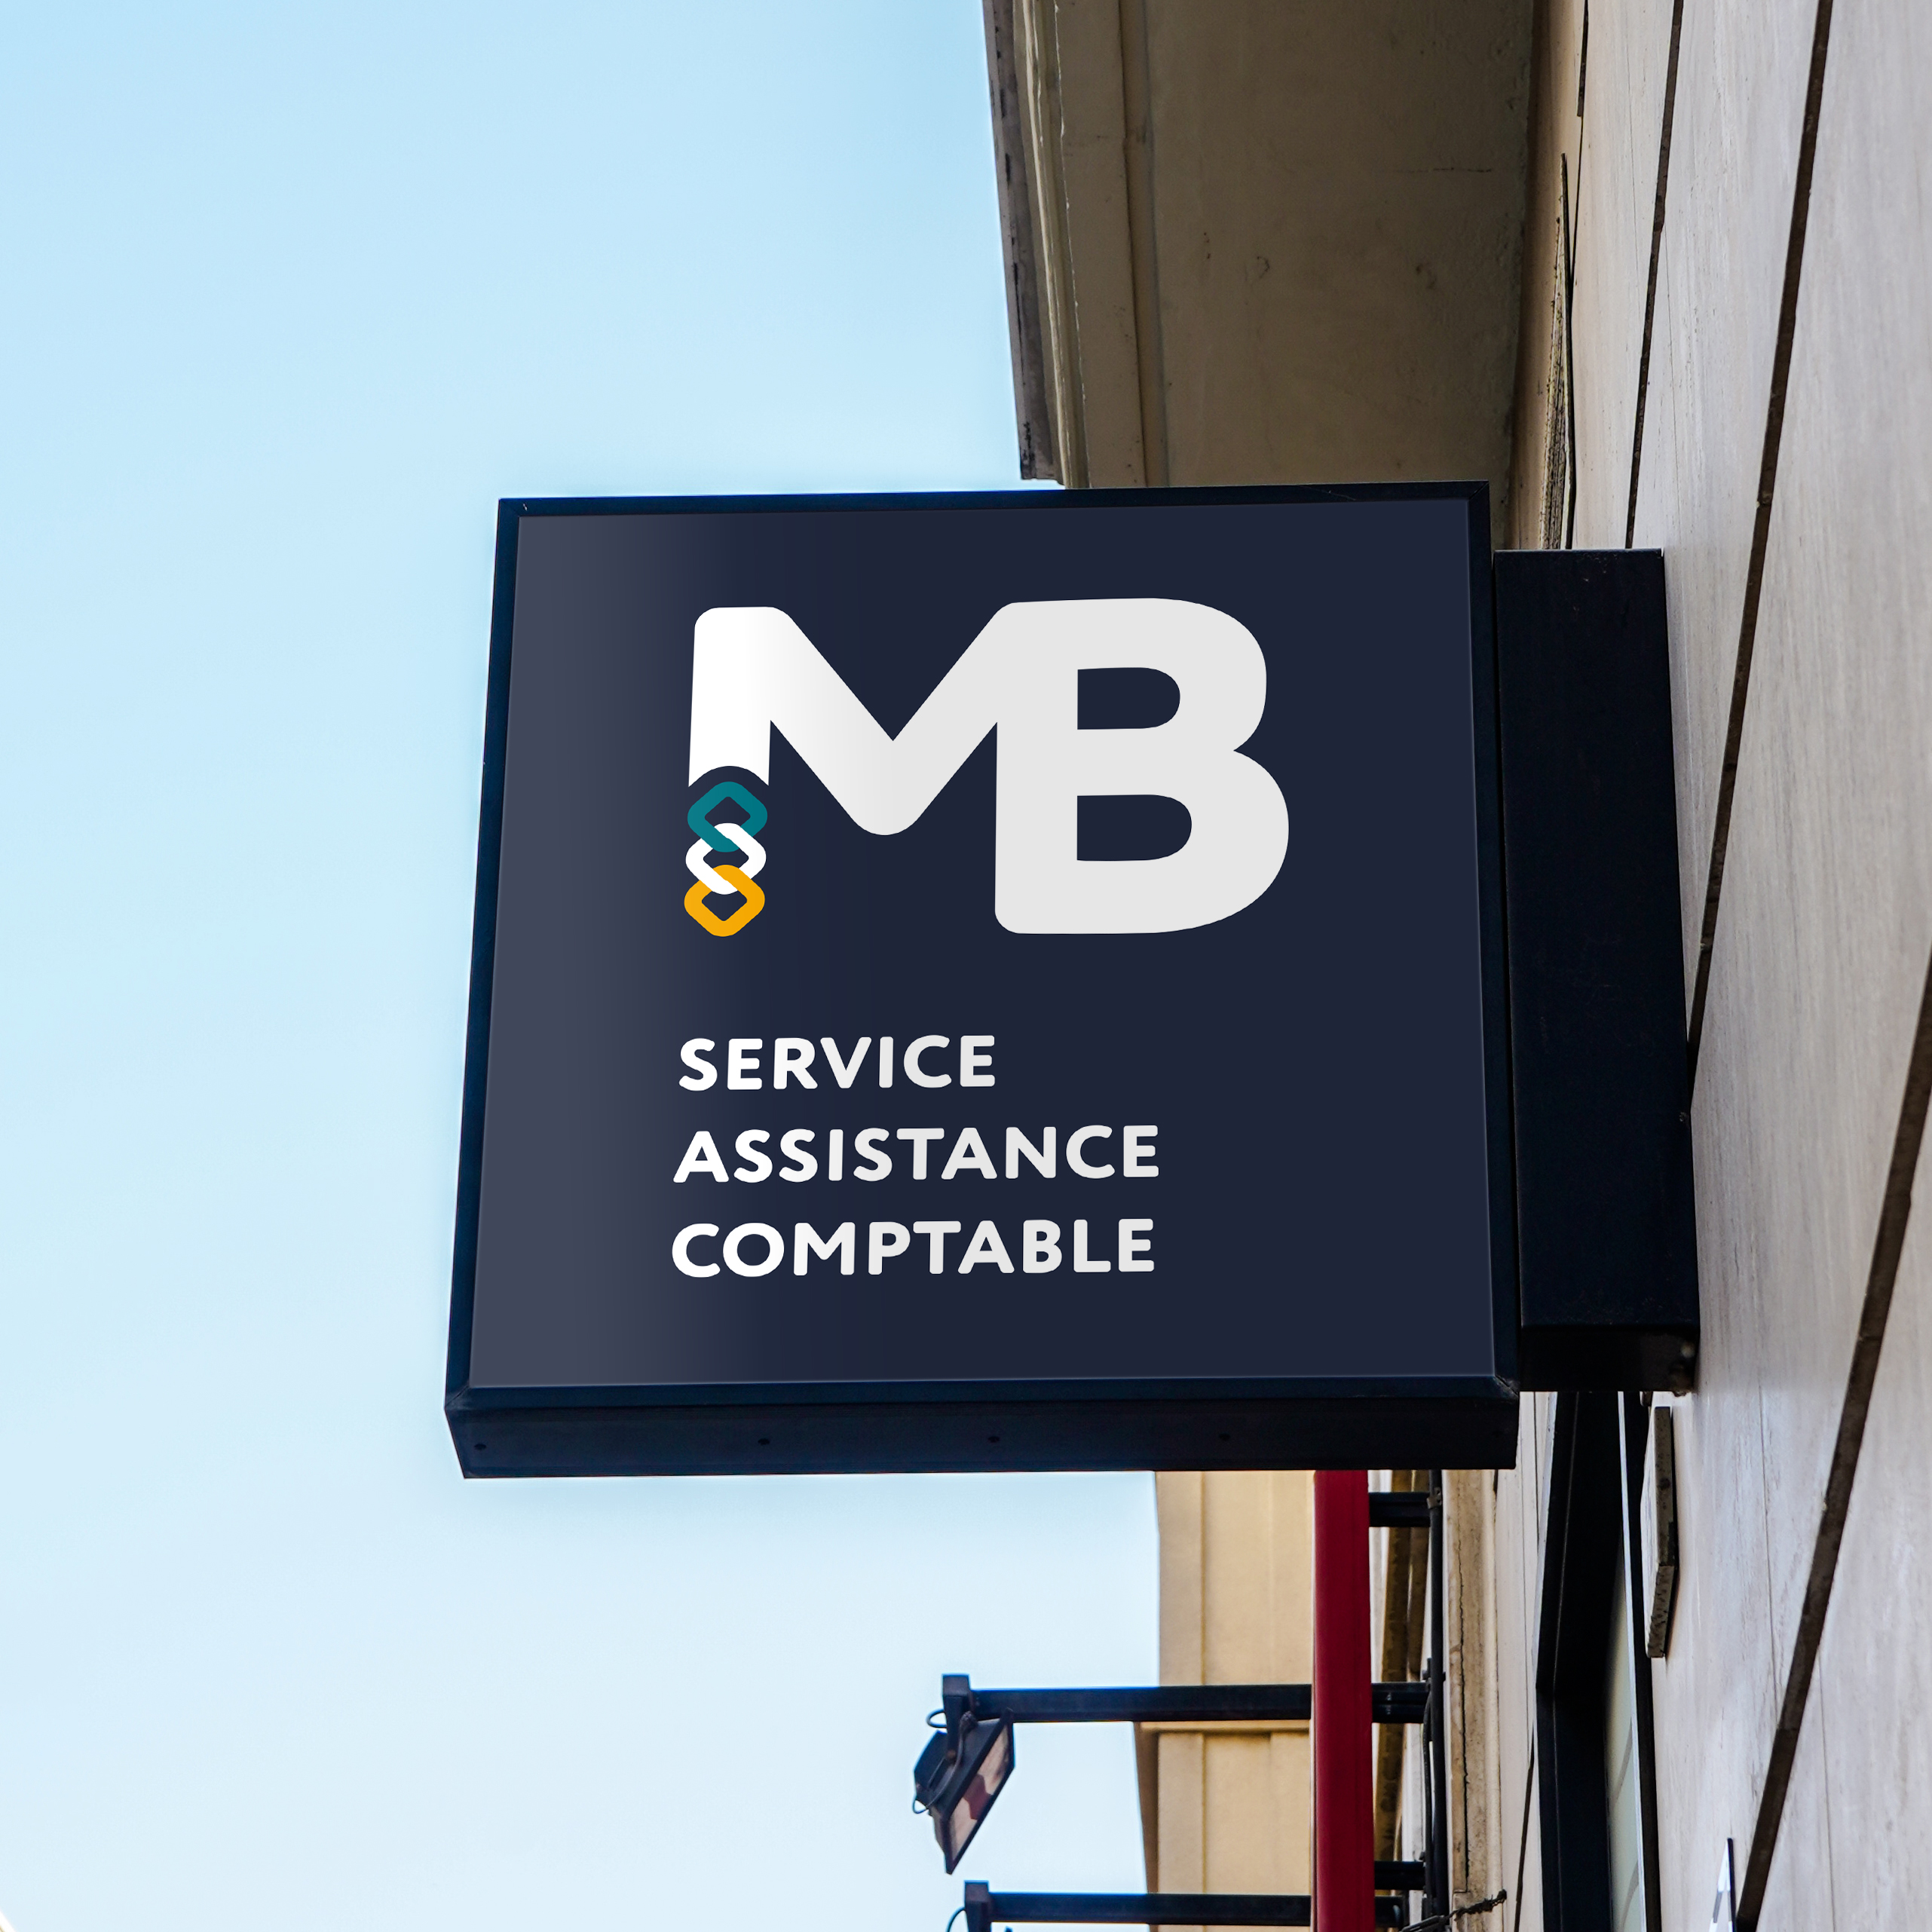 MB Service assitance comptable